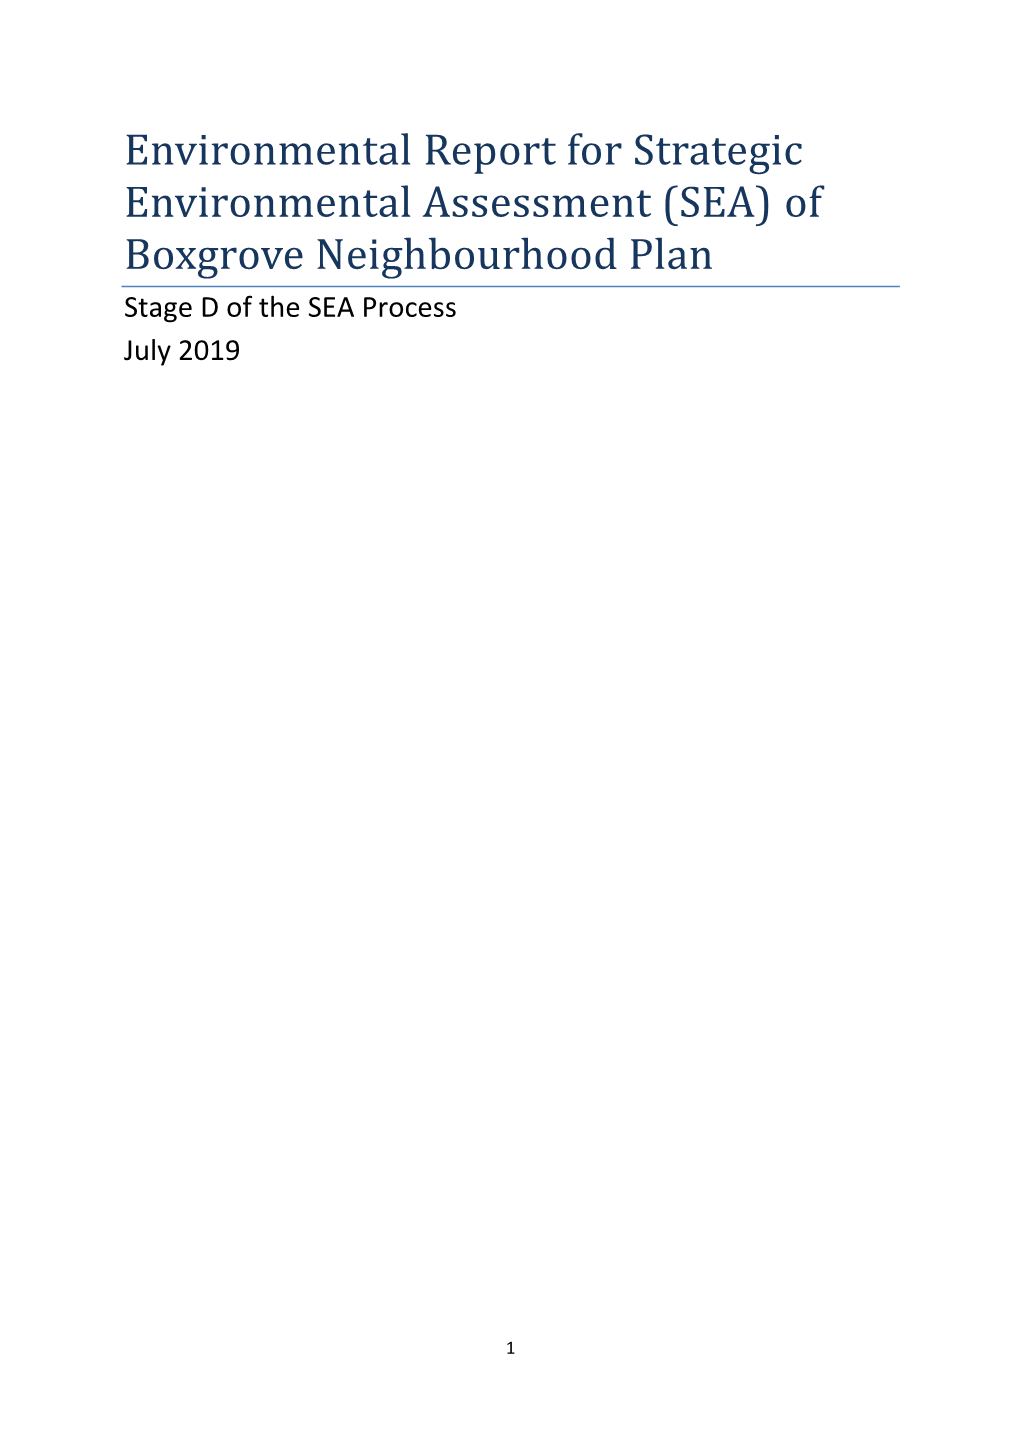 (SEA) of Boxgrove Neighbourhood Plan Stage D of the SEA Process July 2019